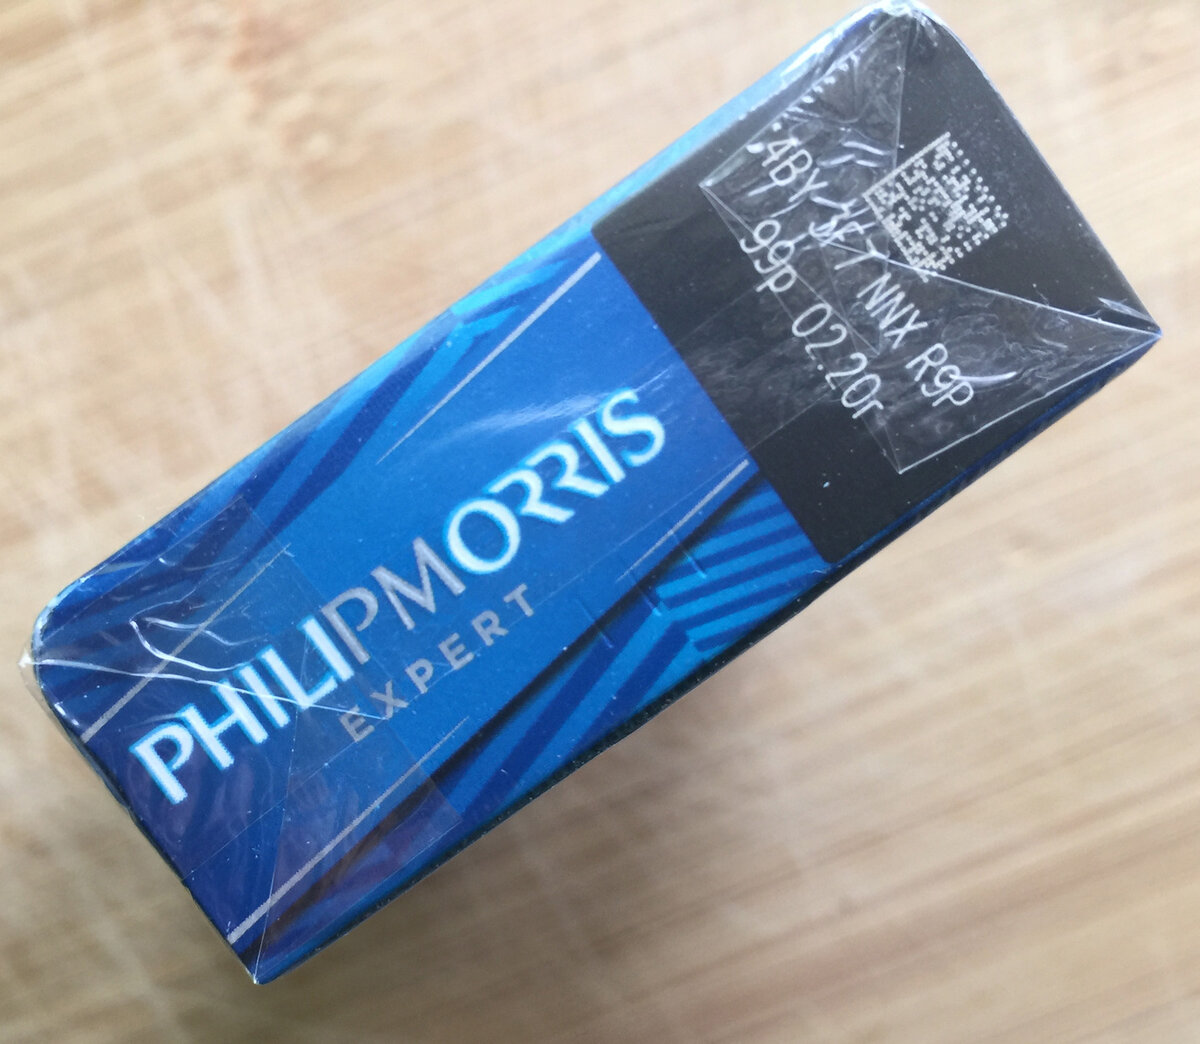 Компакт эксперт. Филип Моррис компакт эксперт (Philip Morris Compact Expert). Philip Morris сигареты компакт эксперт МРЦ 115. Сигареты Philip Morris Signature Expert. Филипс Морис эксперт сигареты.